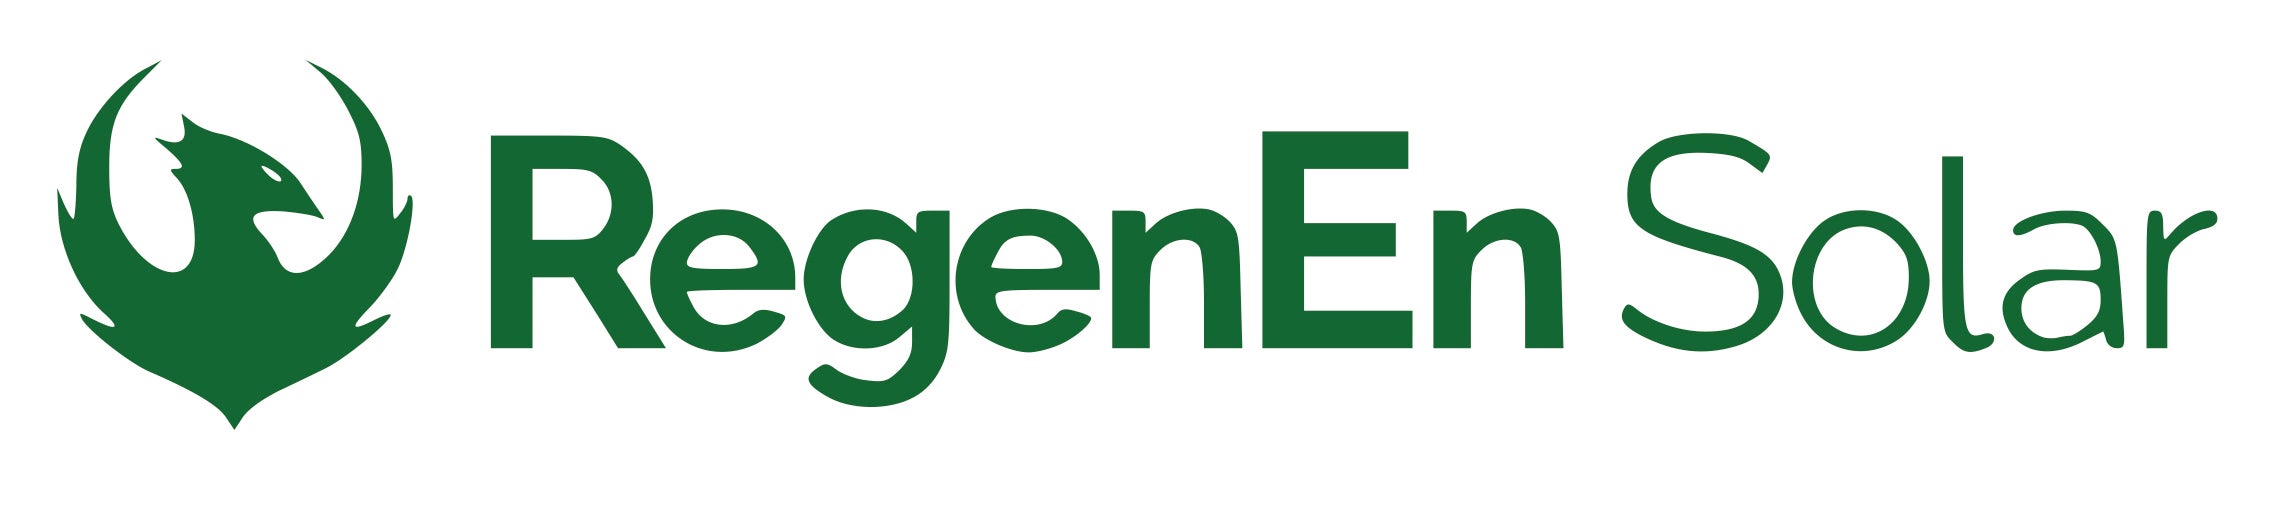 RegenEn Solar (Out Of Business) logo